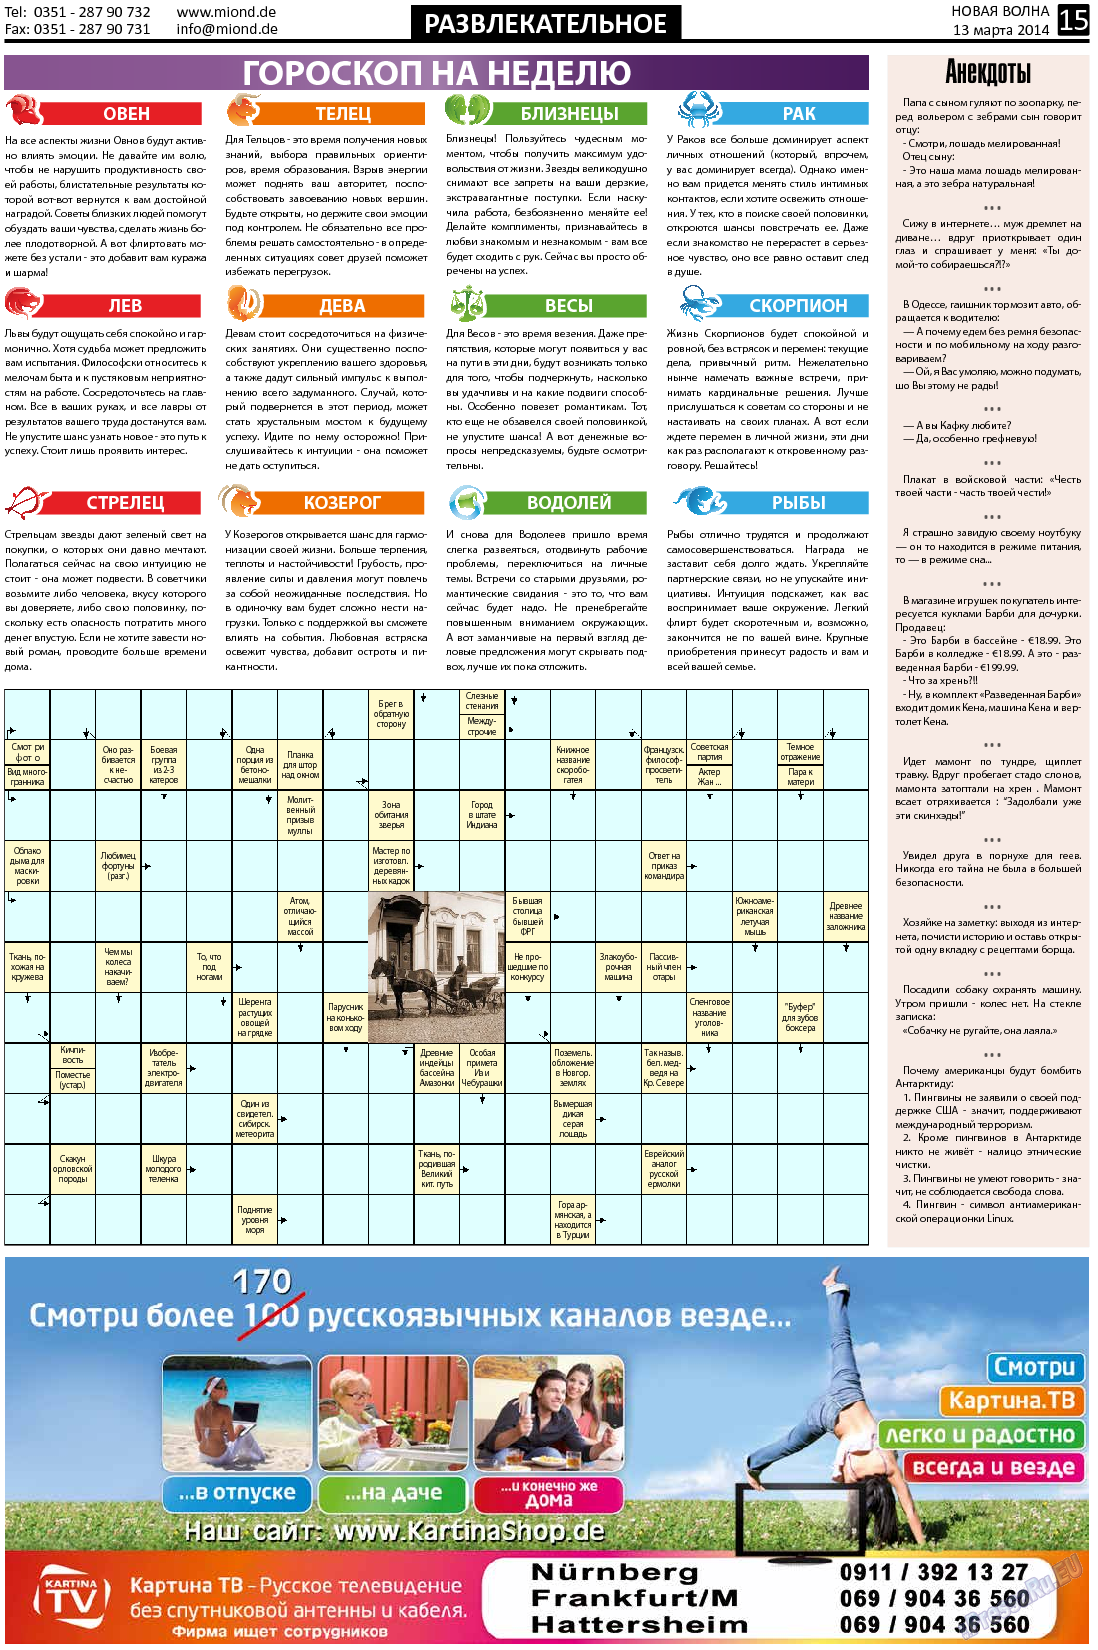 Новая Wолна, газета. 2014 №11 стр.15